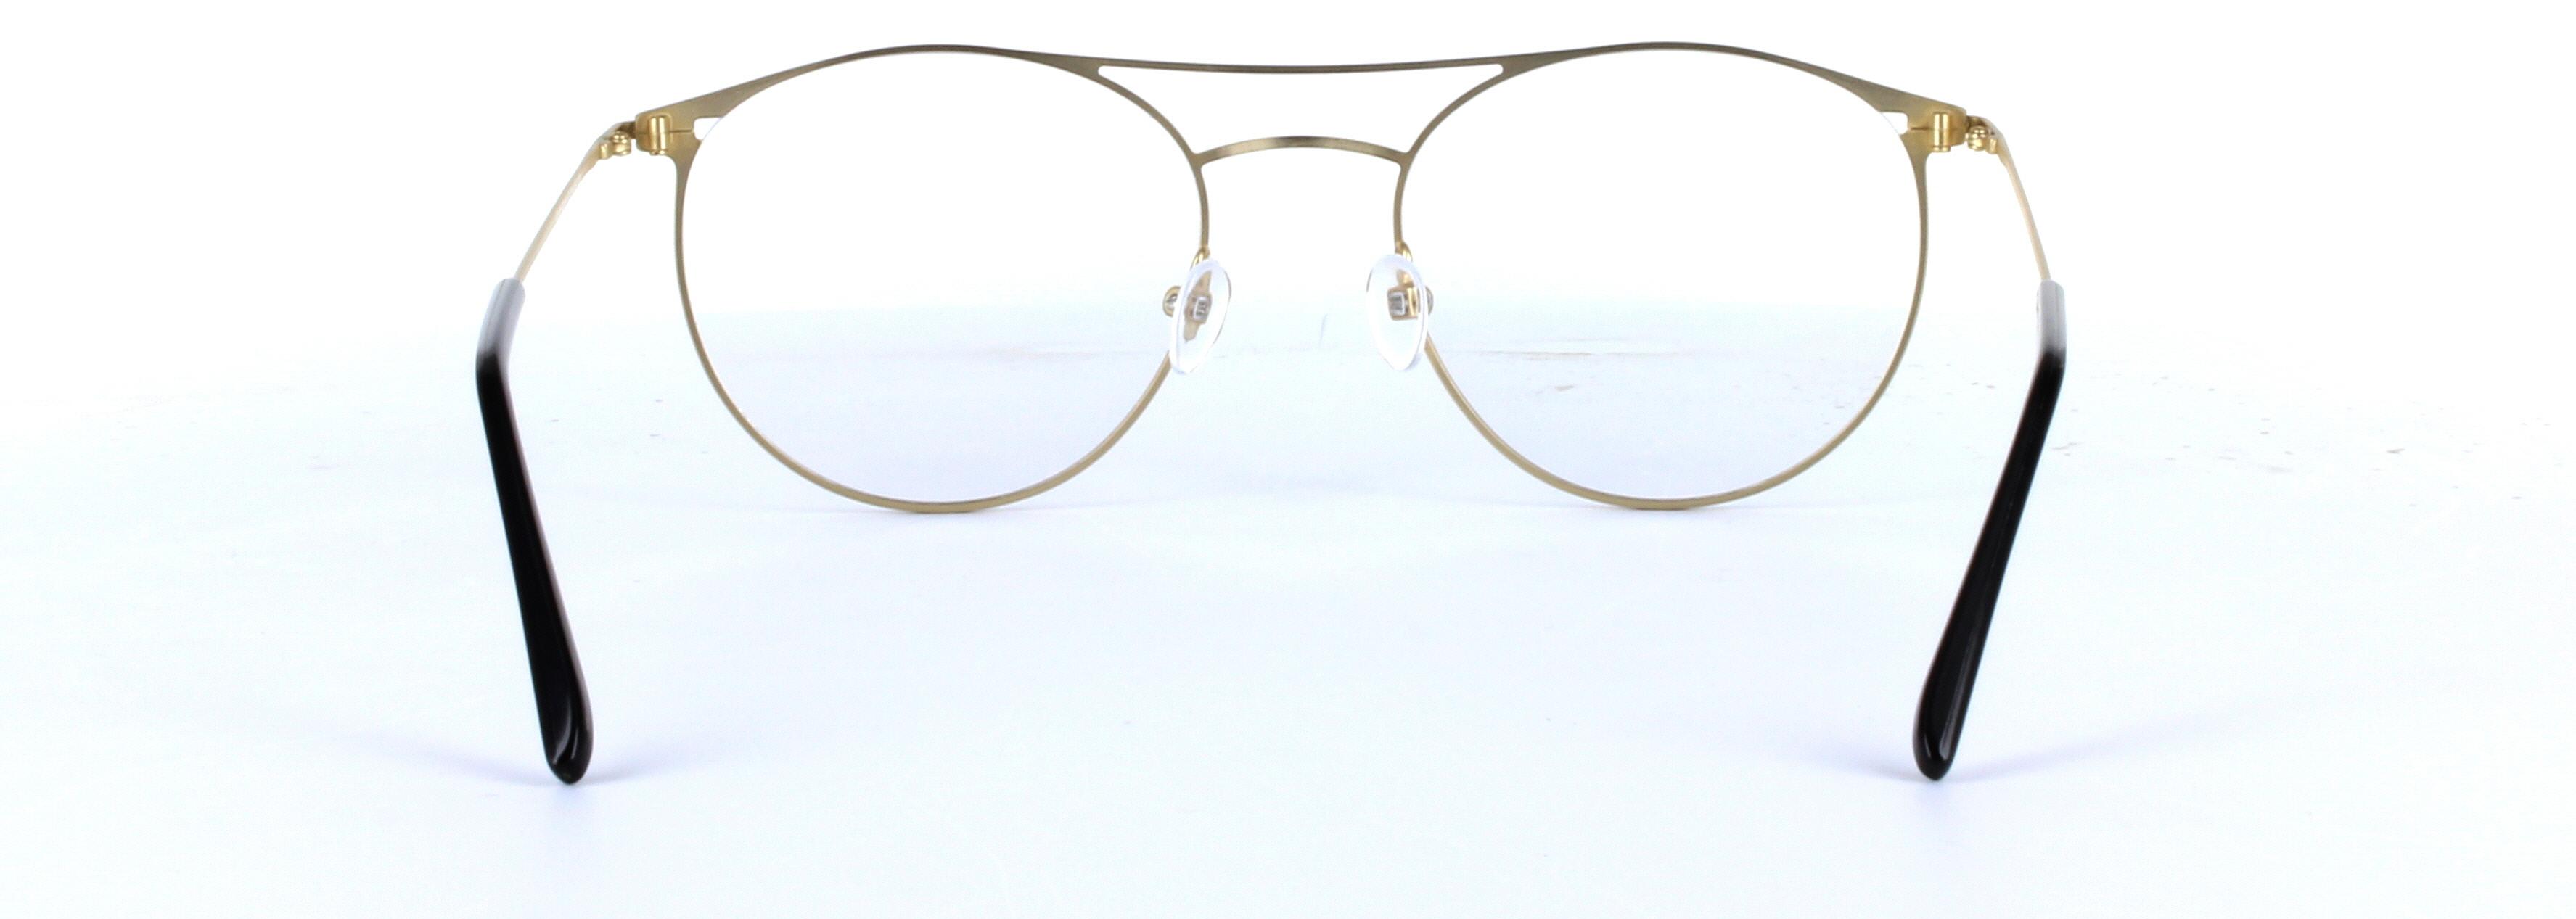 Dexter Olive Green Full Rim Round Metal Glasses - Image View 3